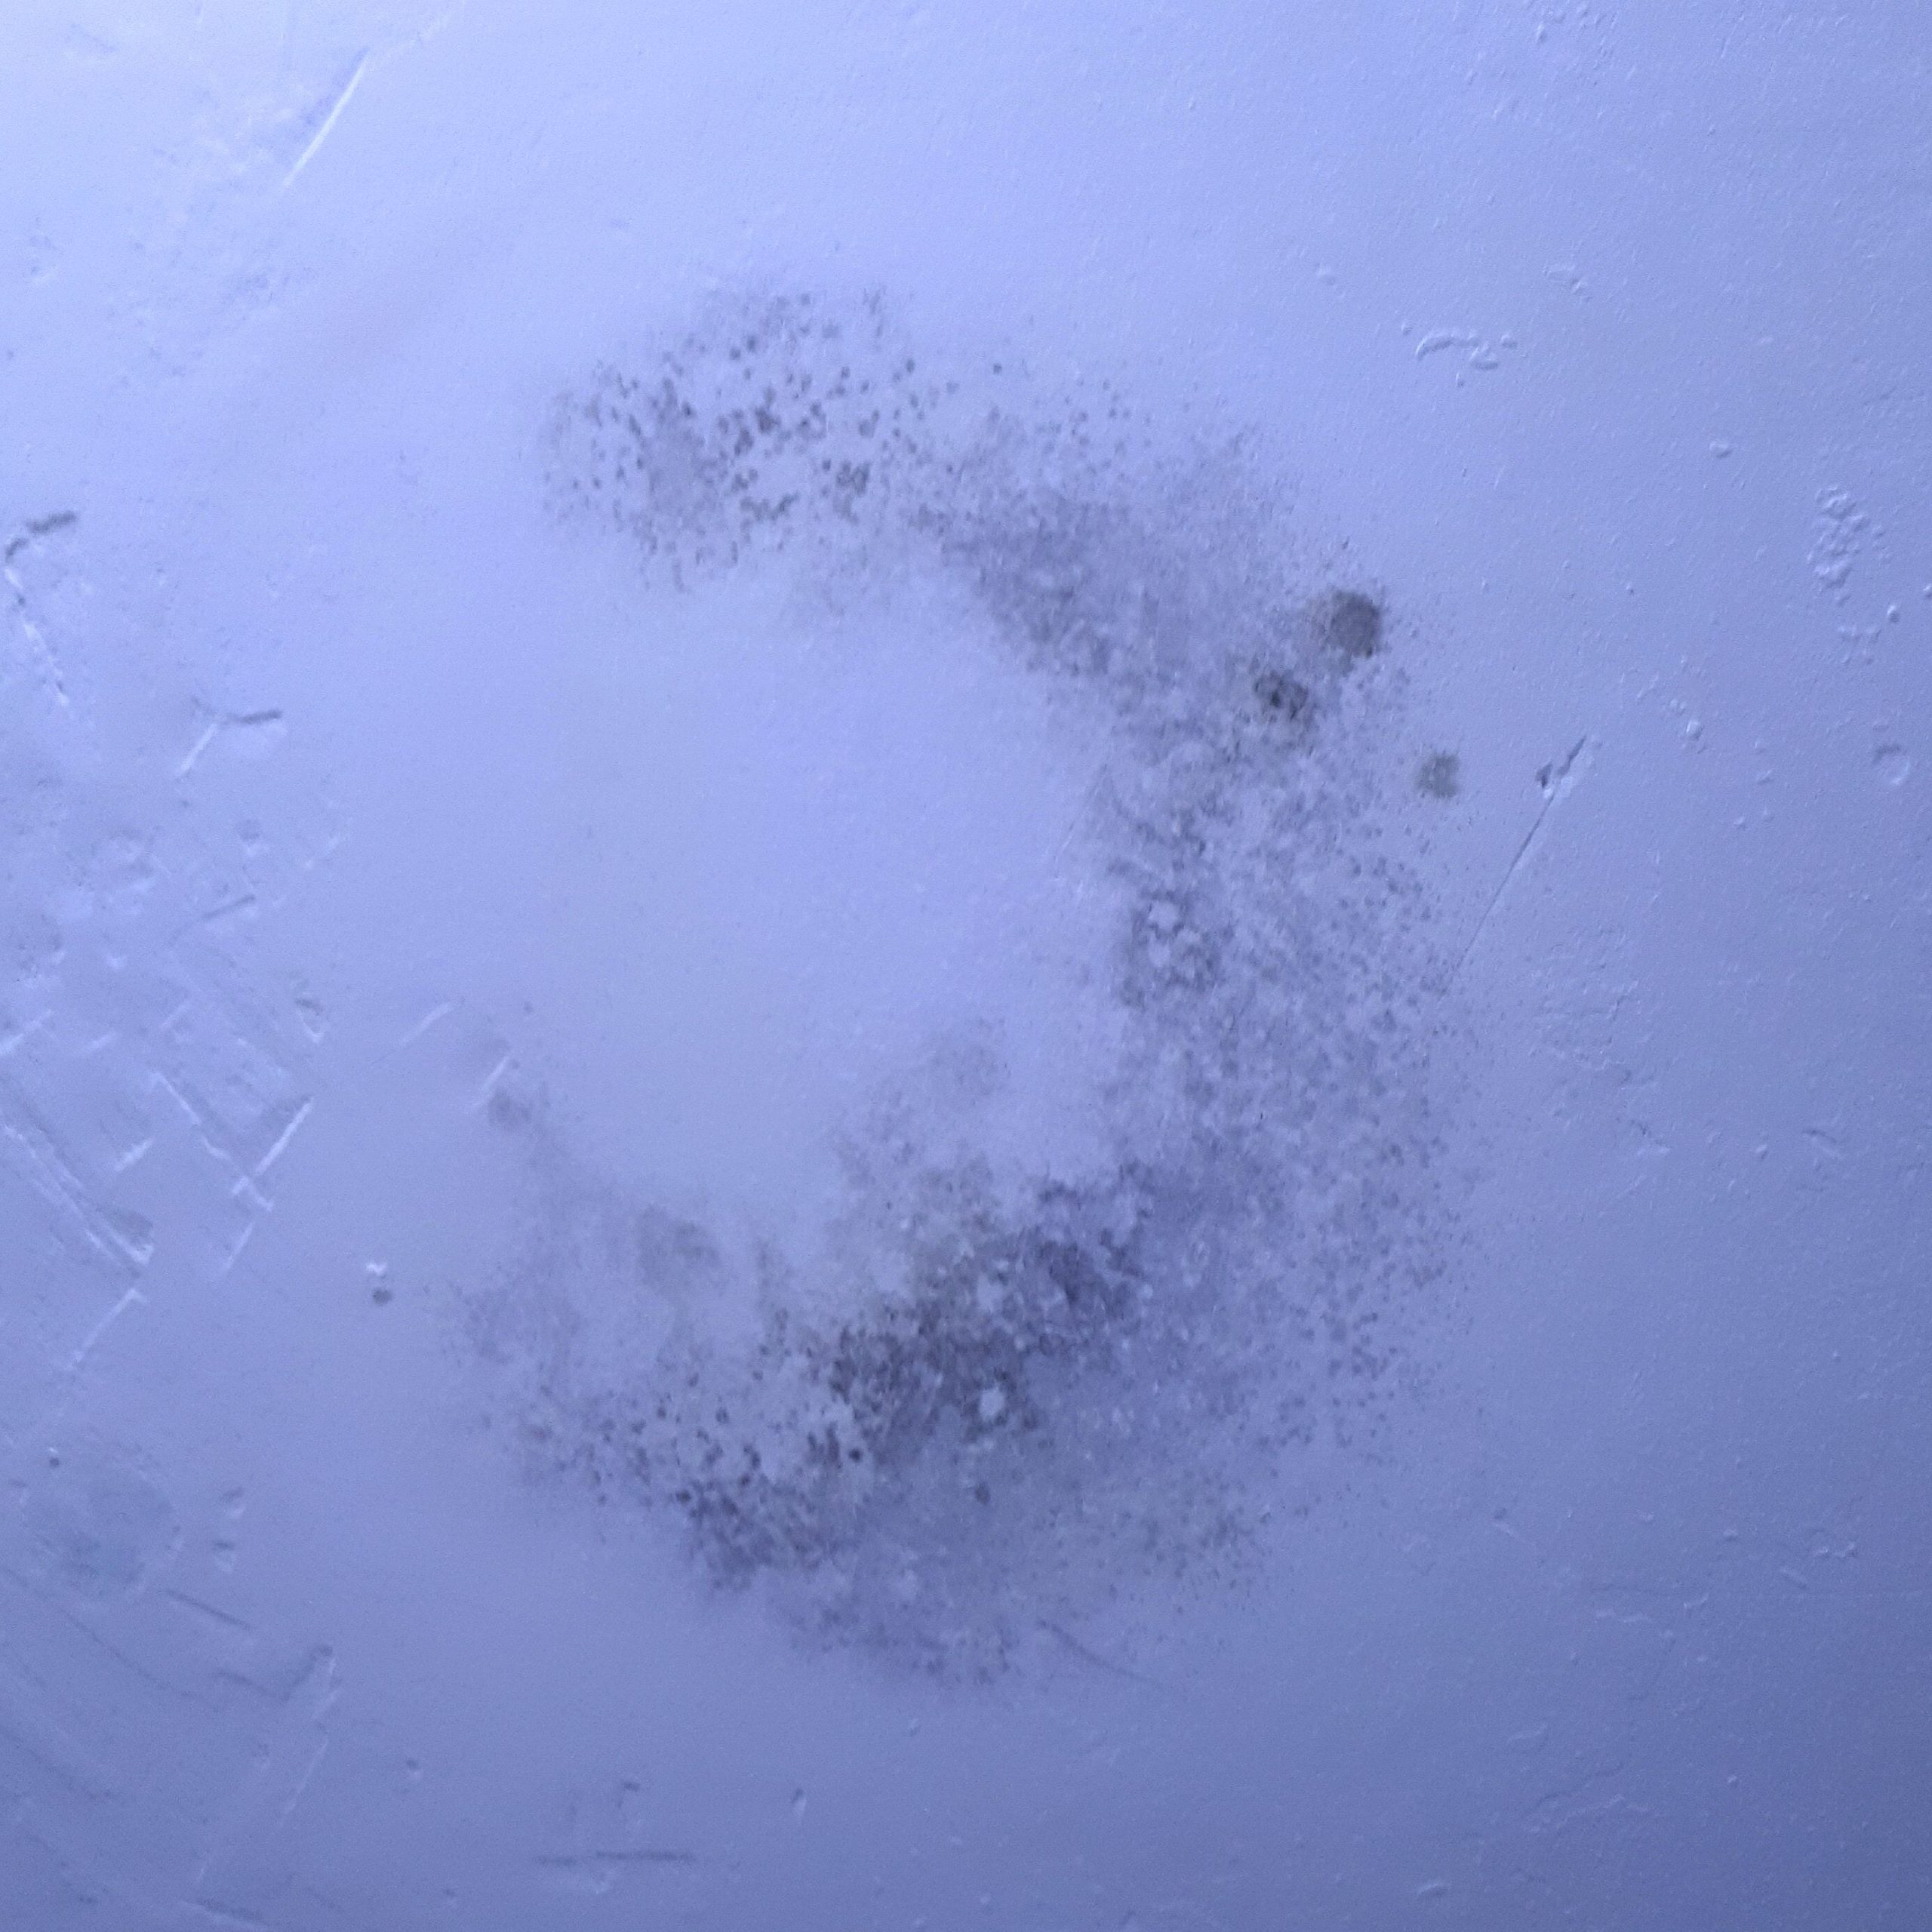 Mold stain in bathroom ceiling looks like Dreamworks logo ...